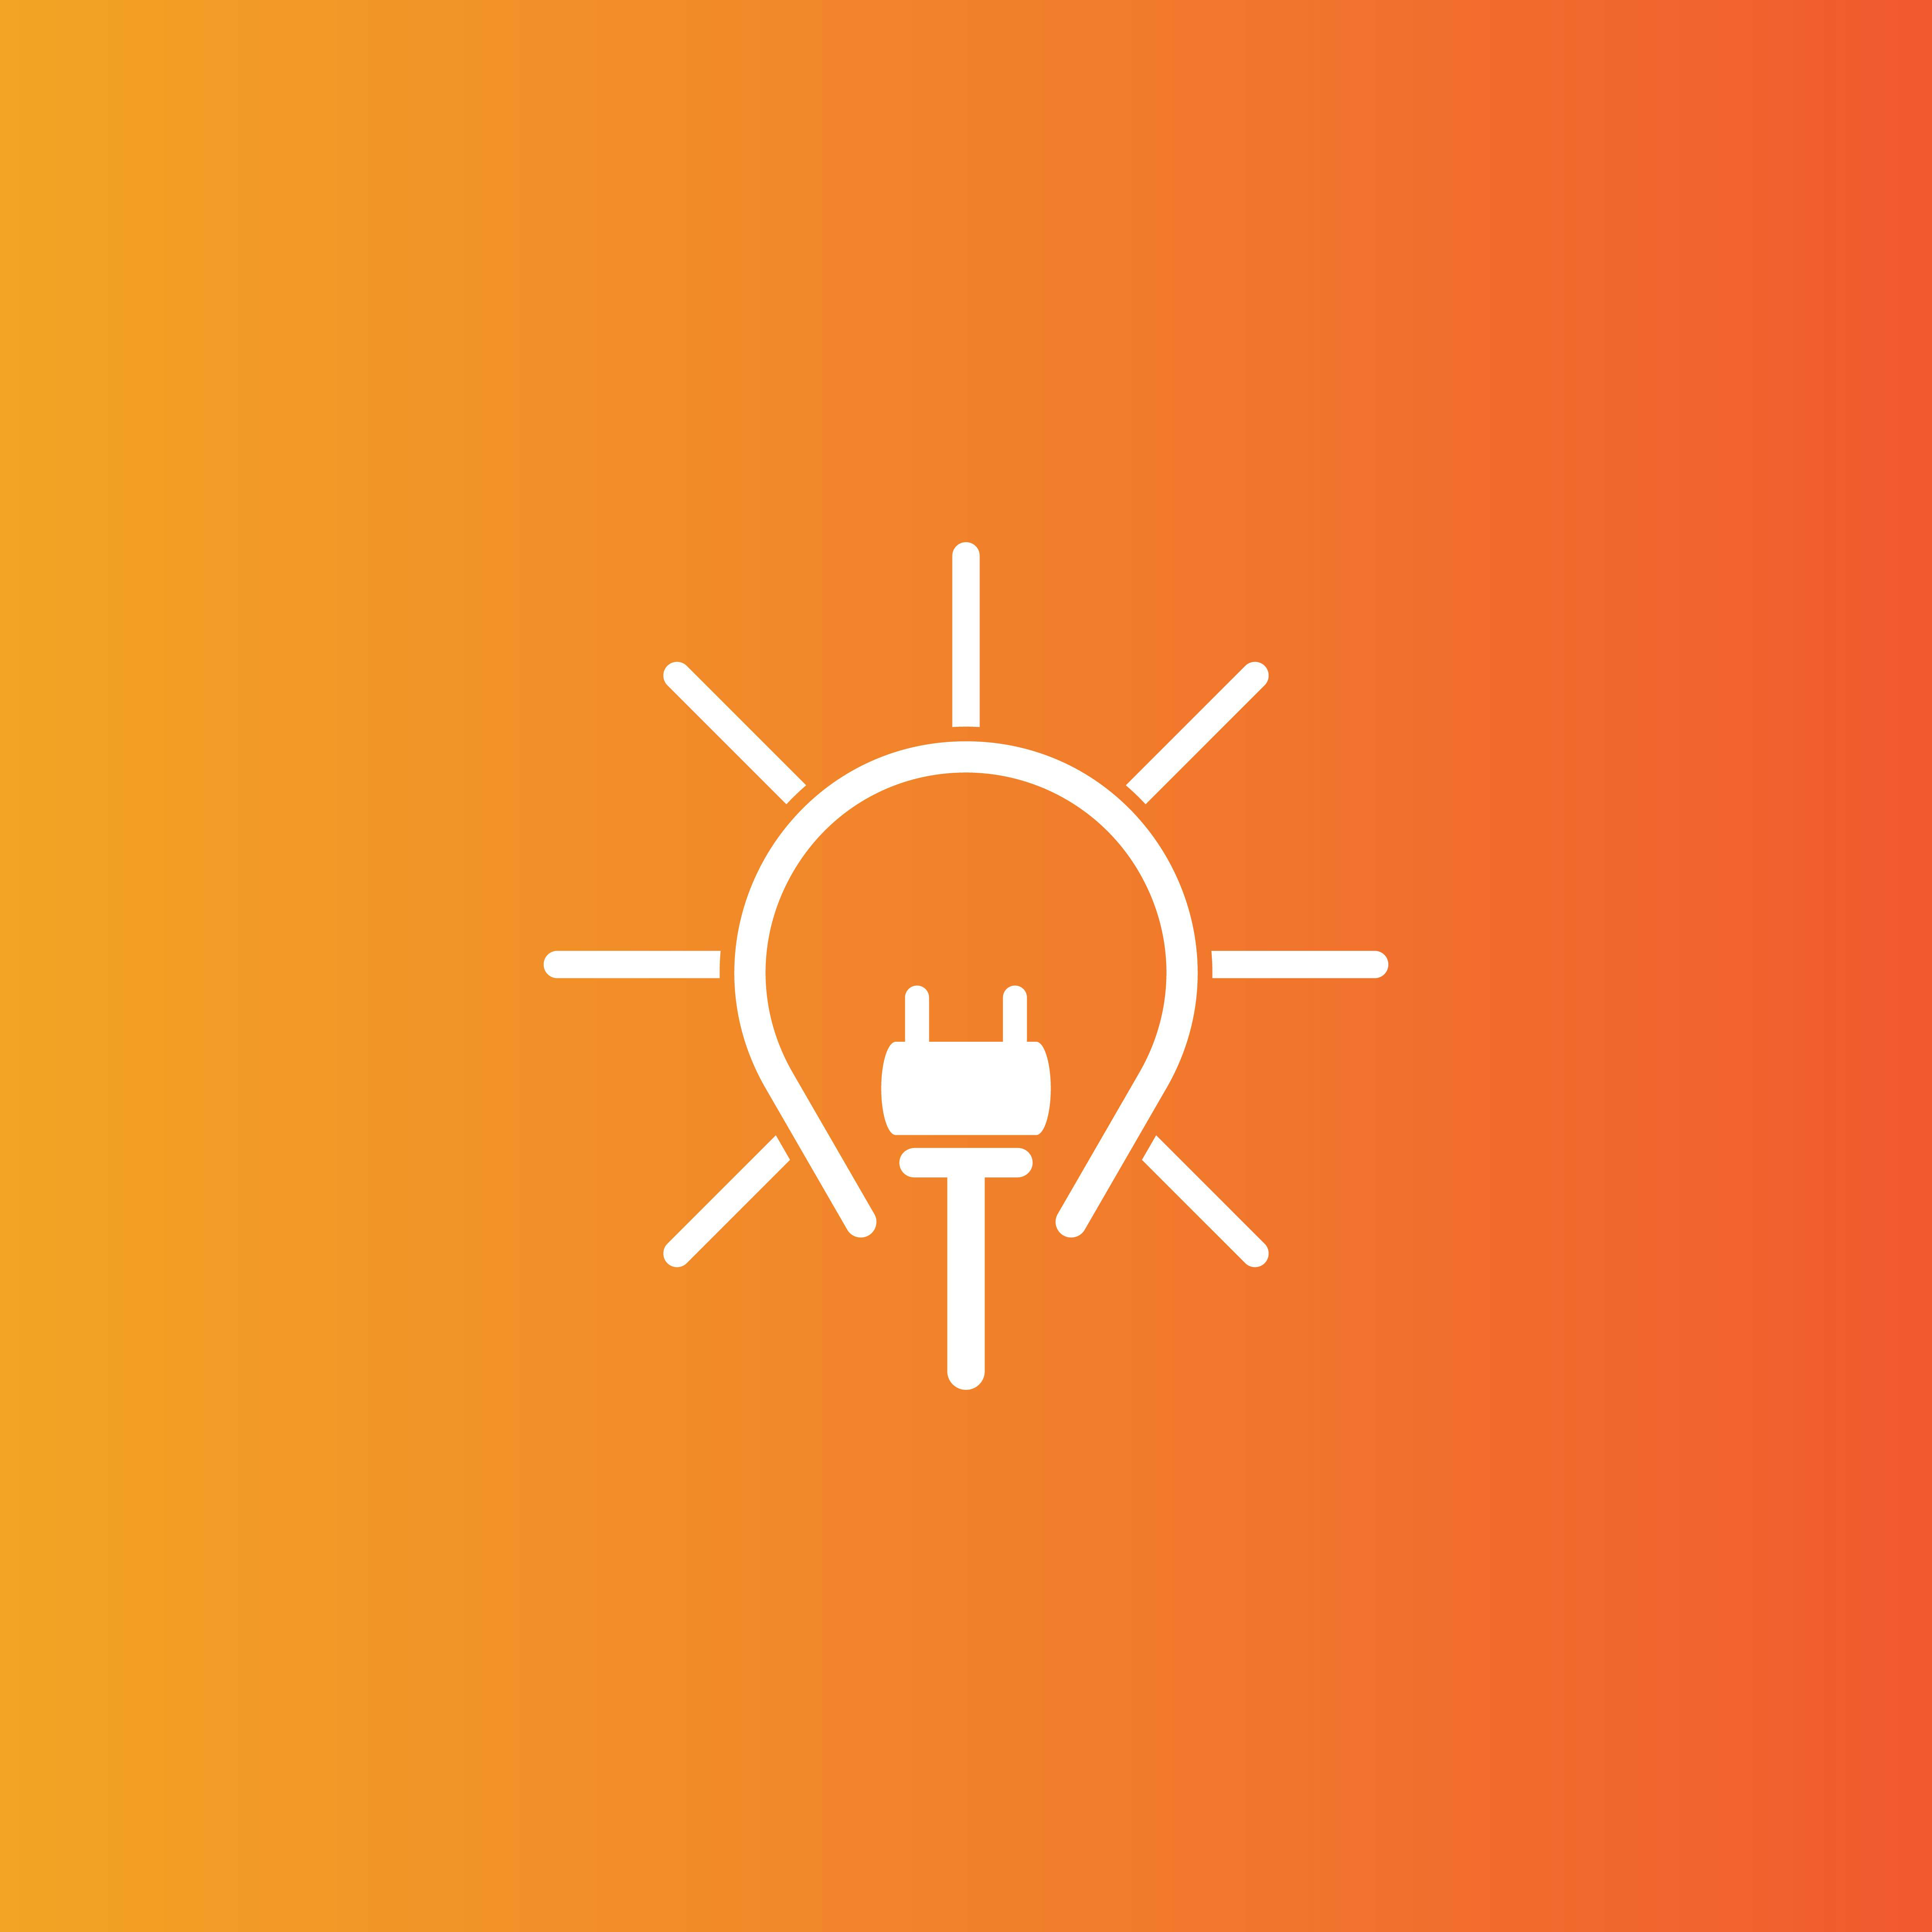 Electric lamp logo template icon design